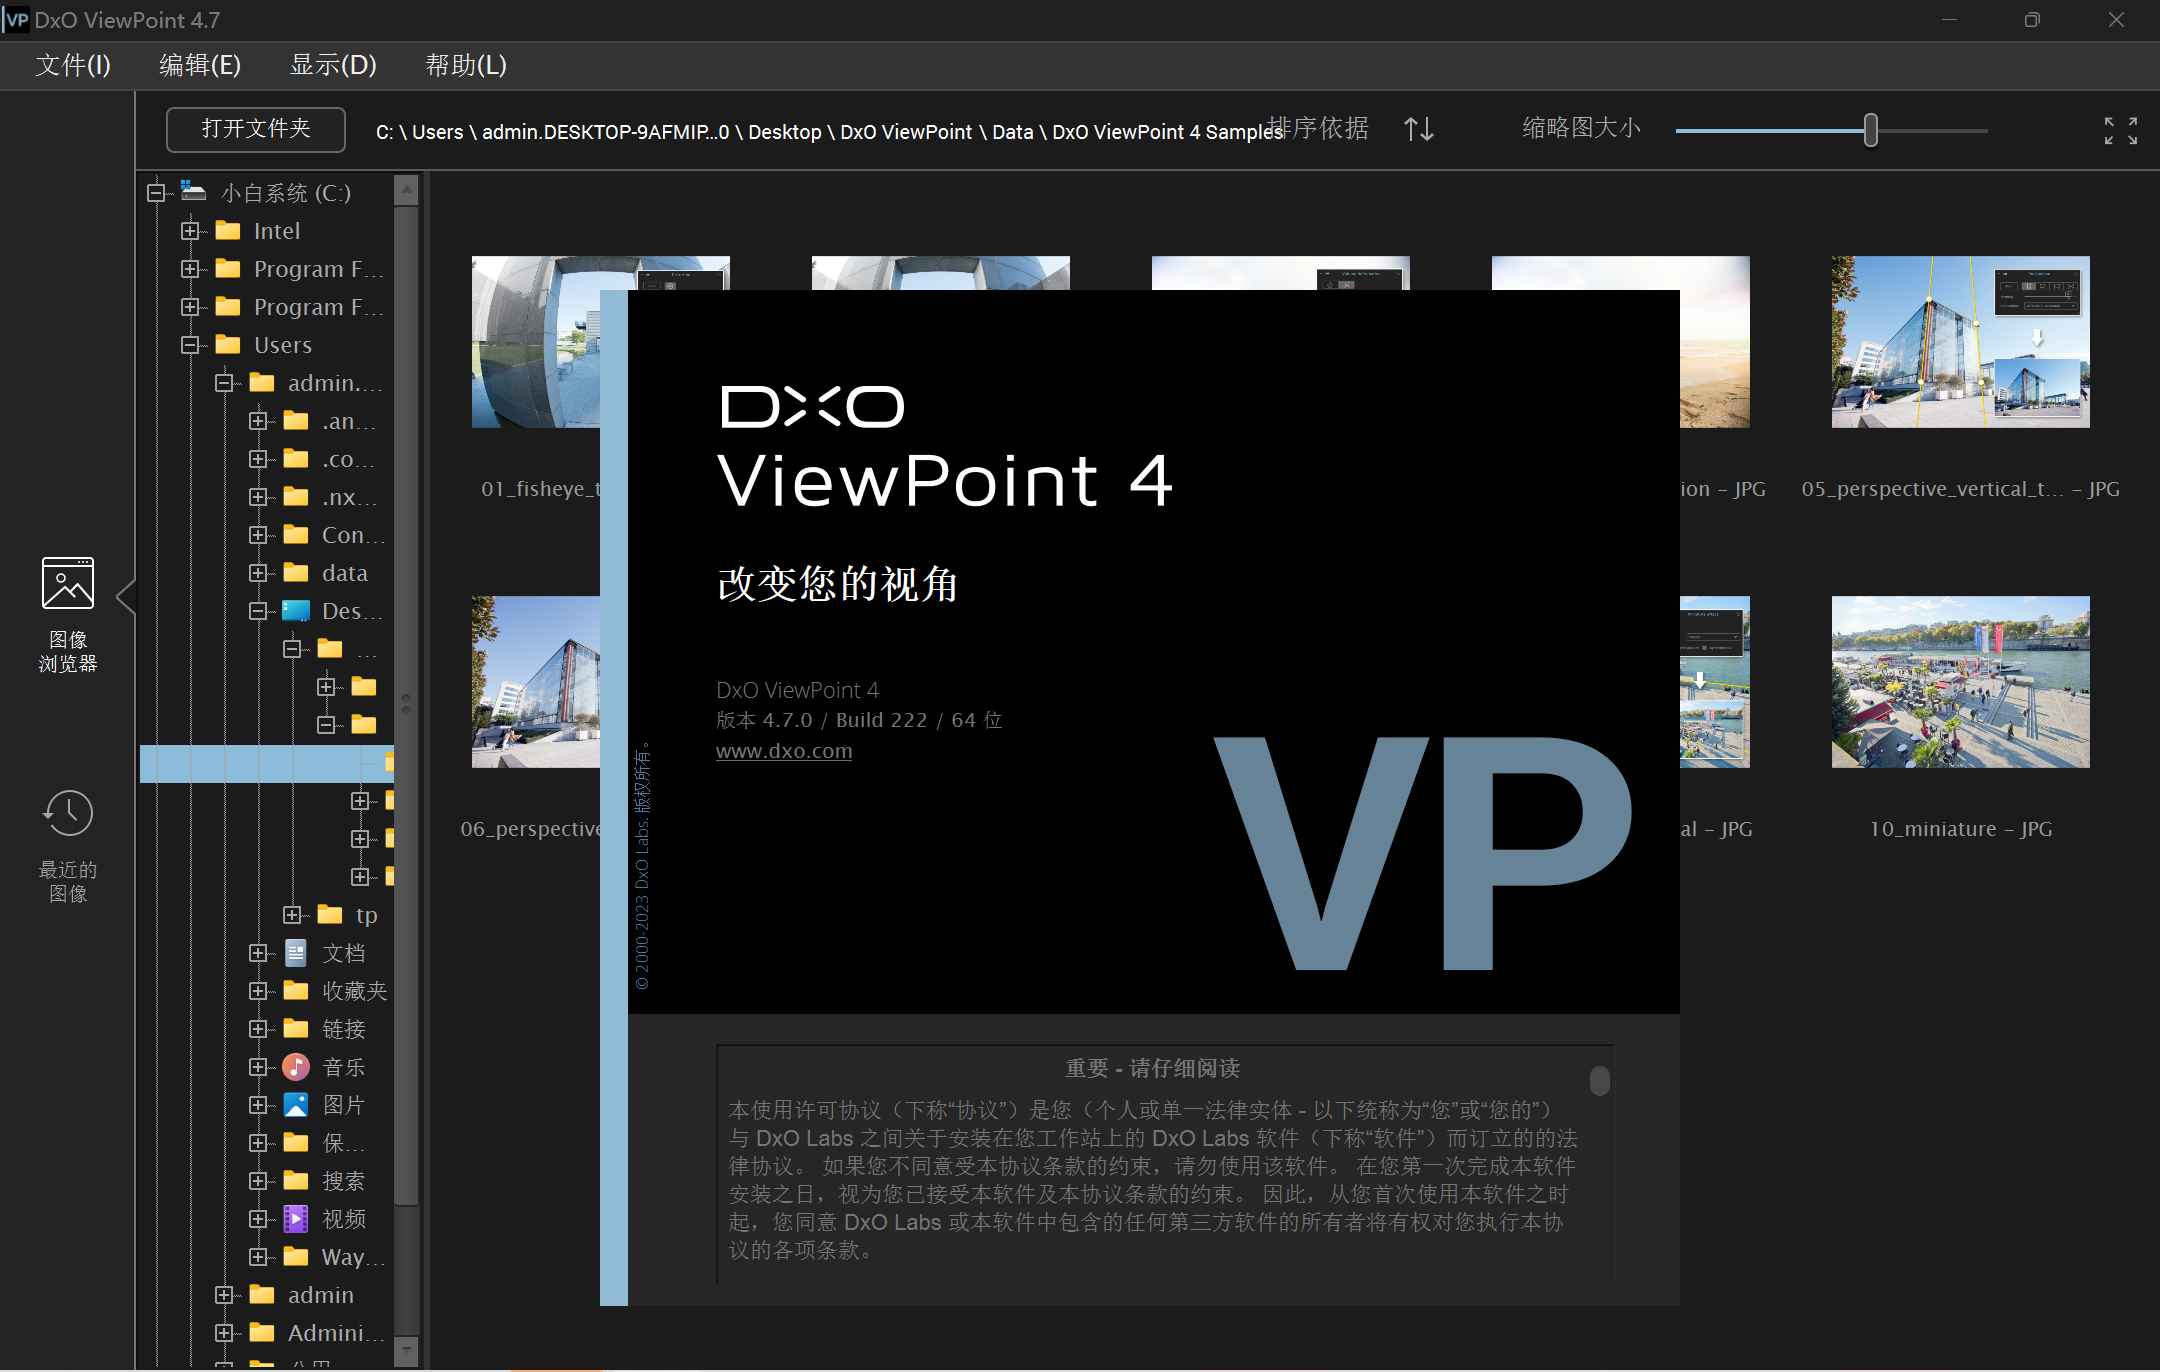 DxO-ViewPoint-4.7.0.222 4